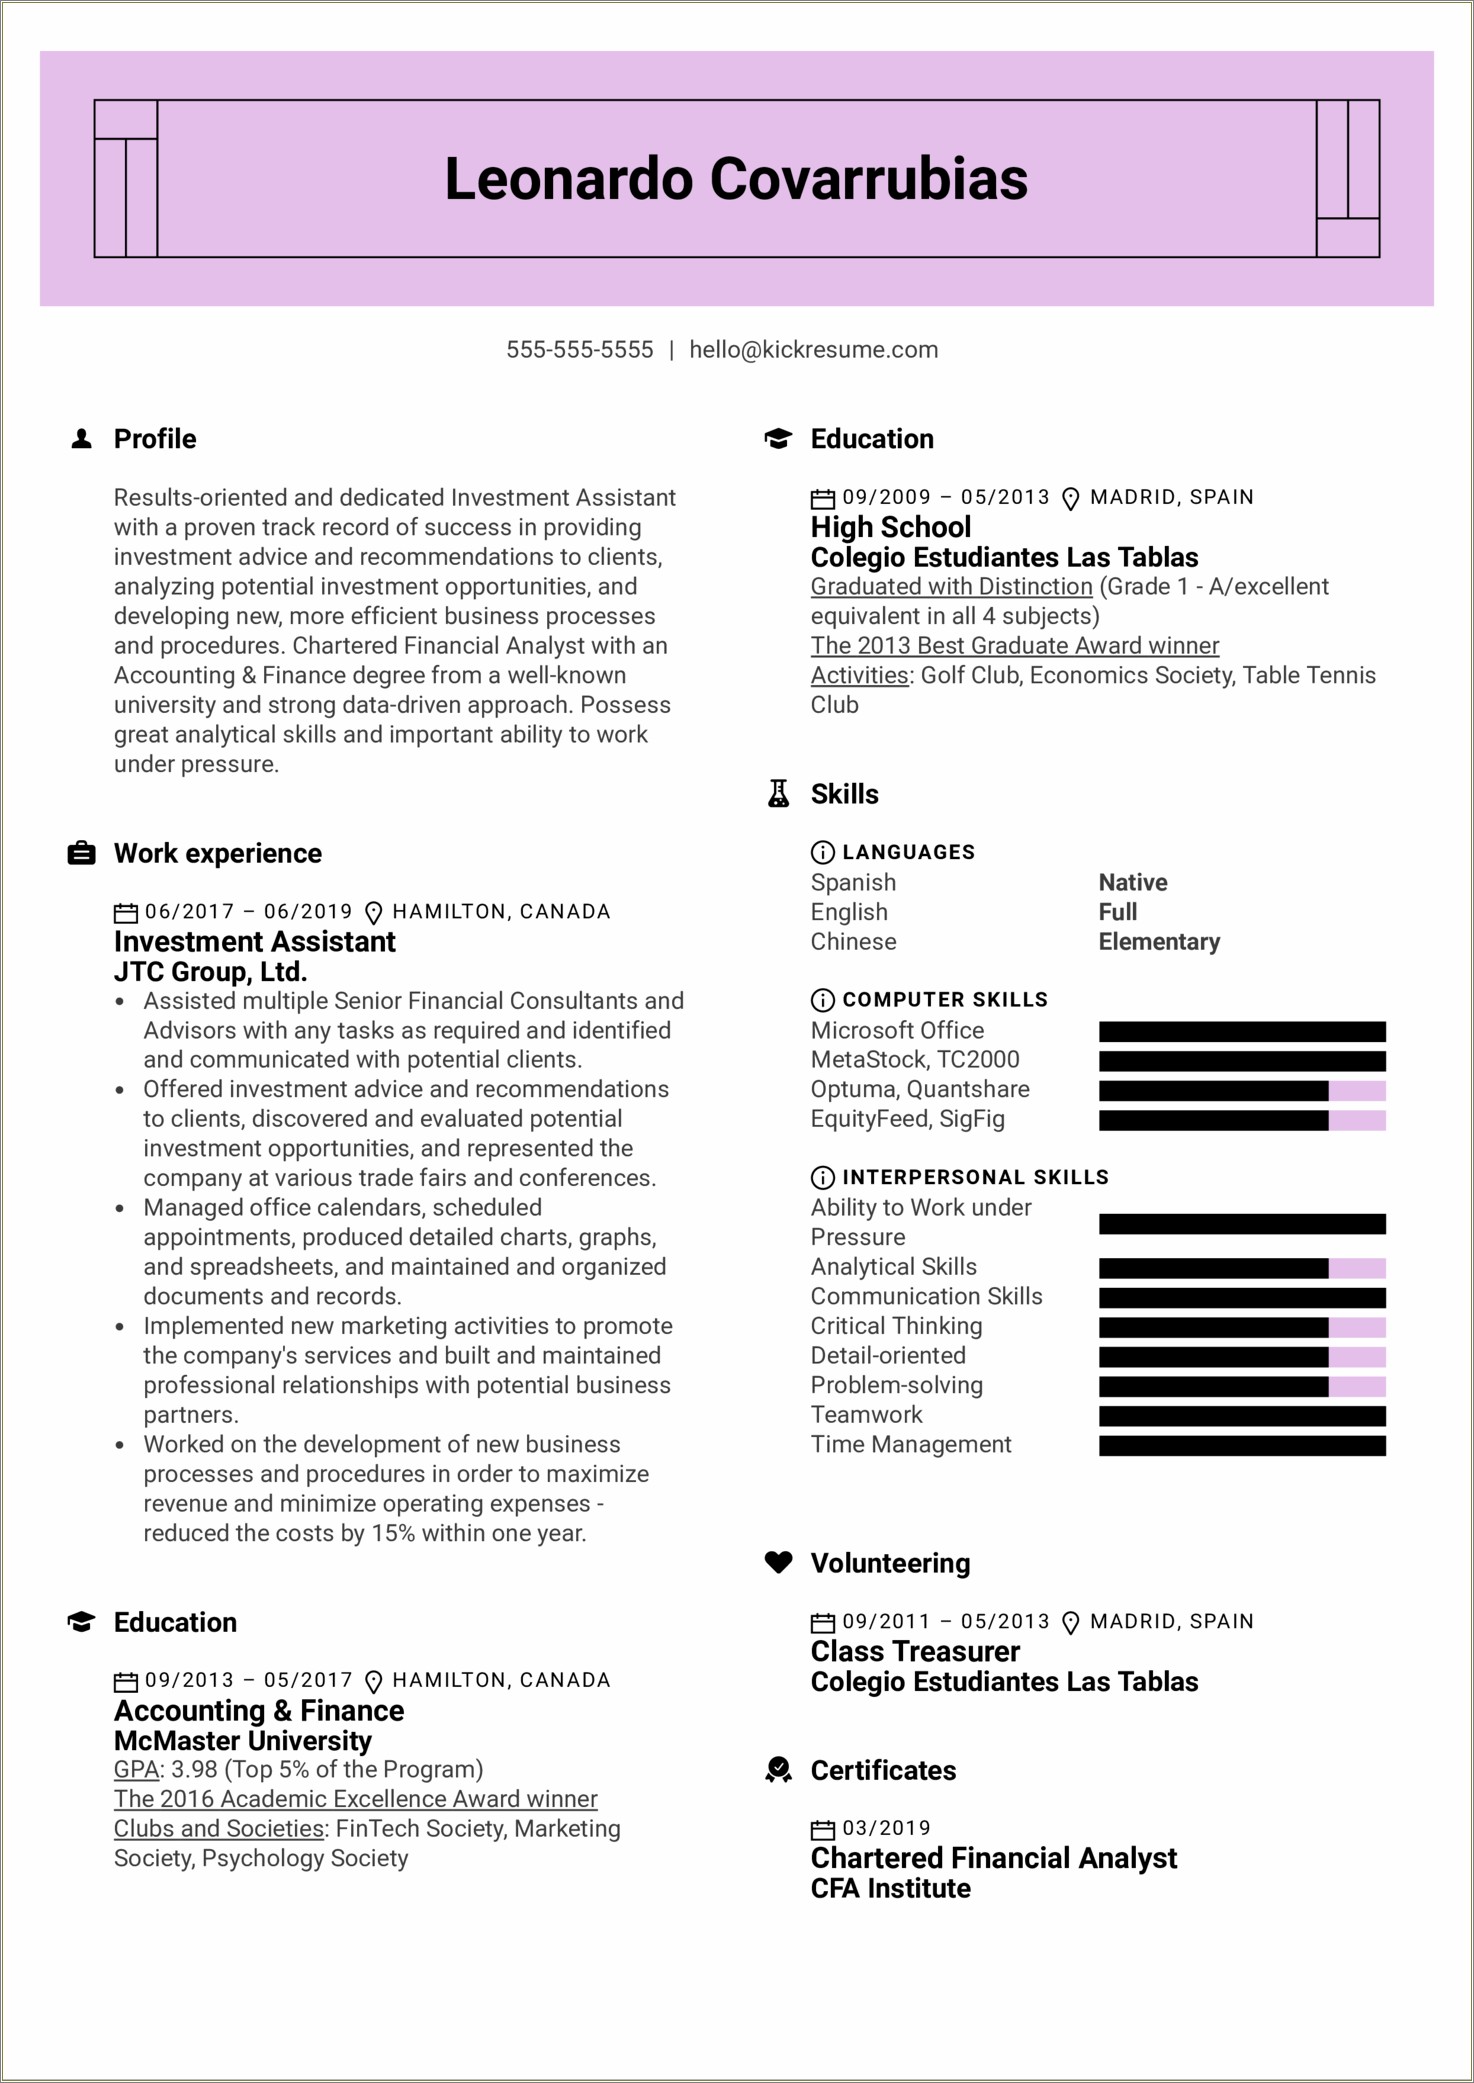 Financial Analyst Assistant Job Description Resume